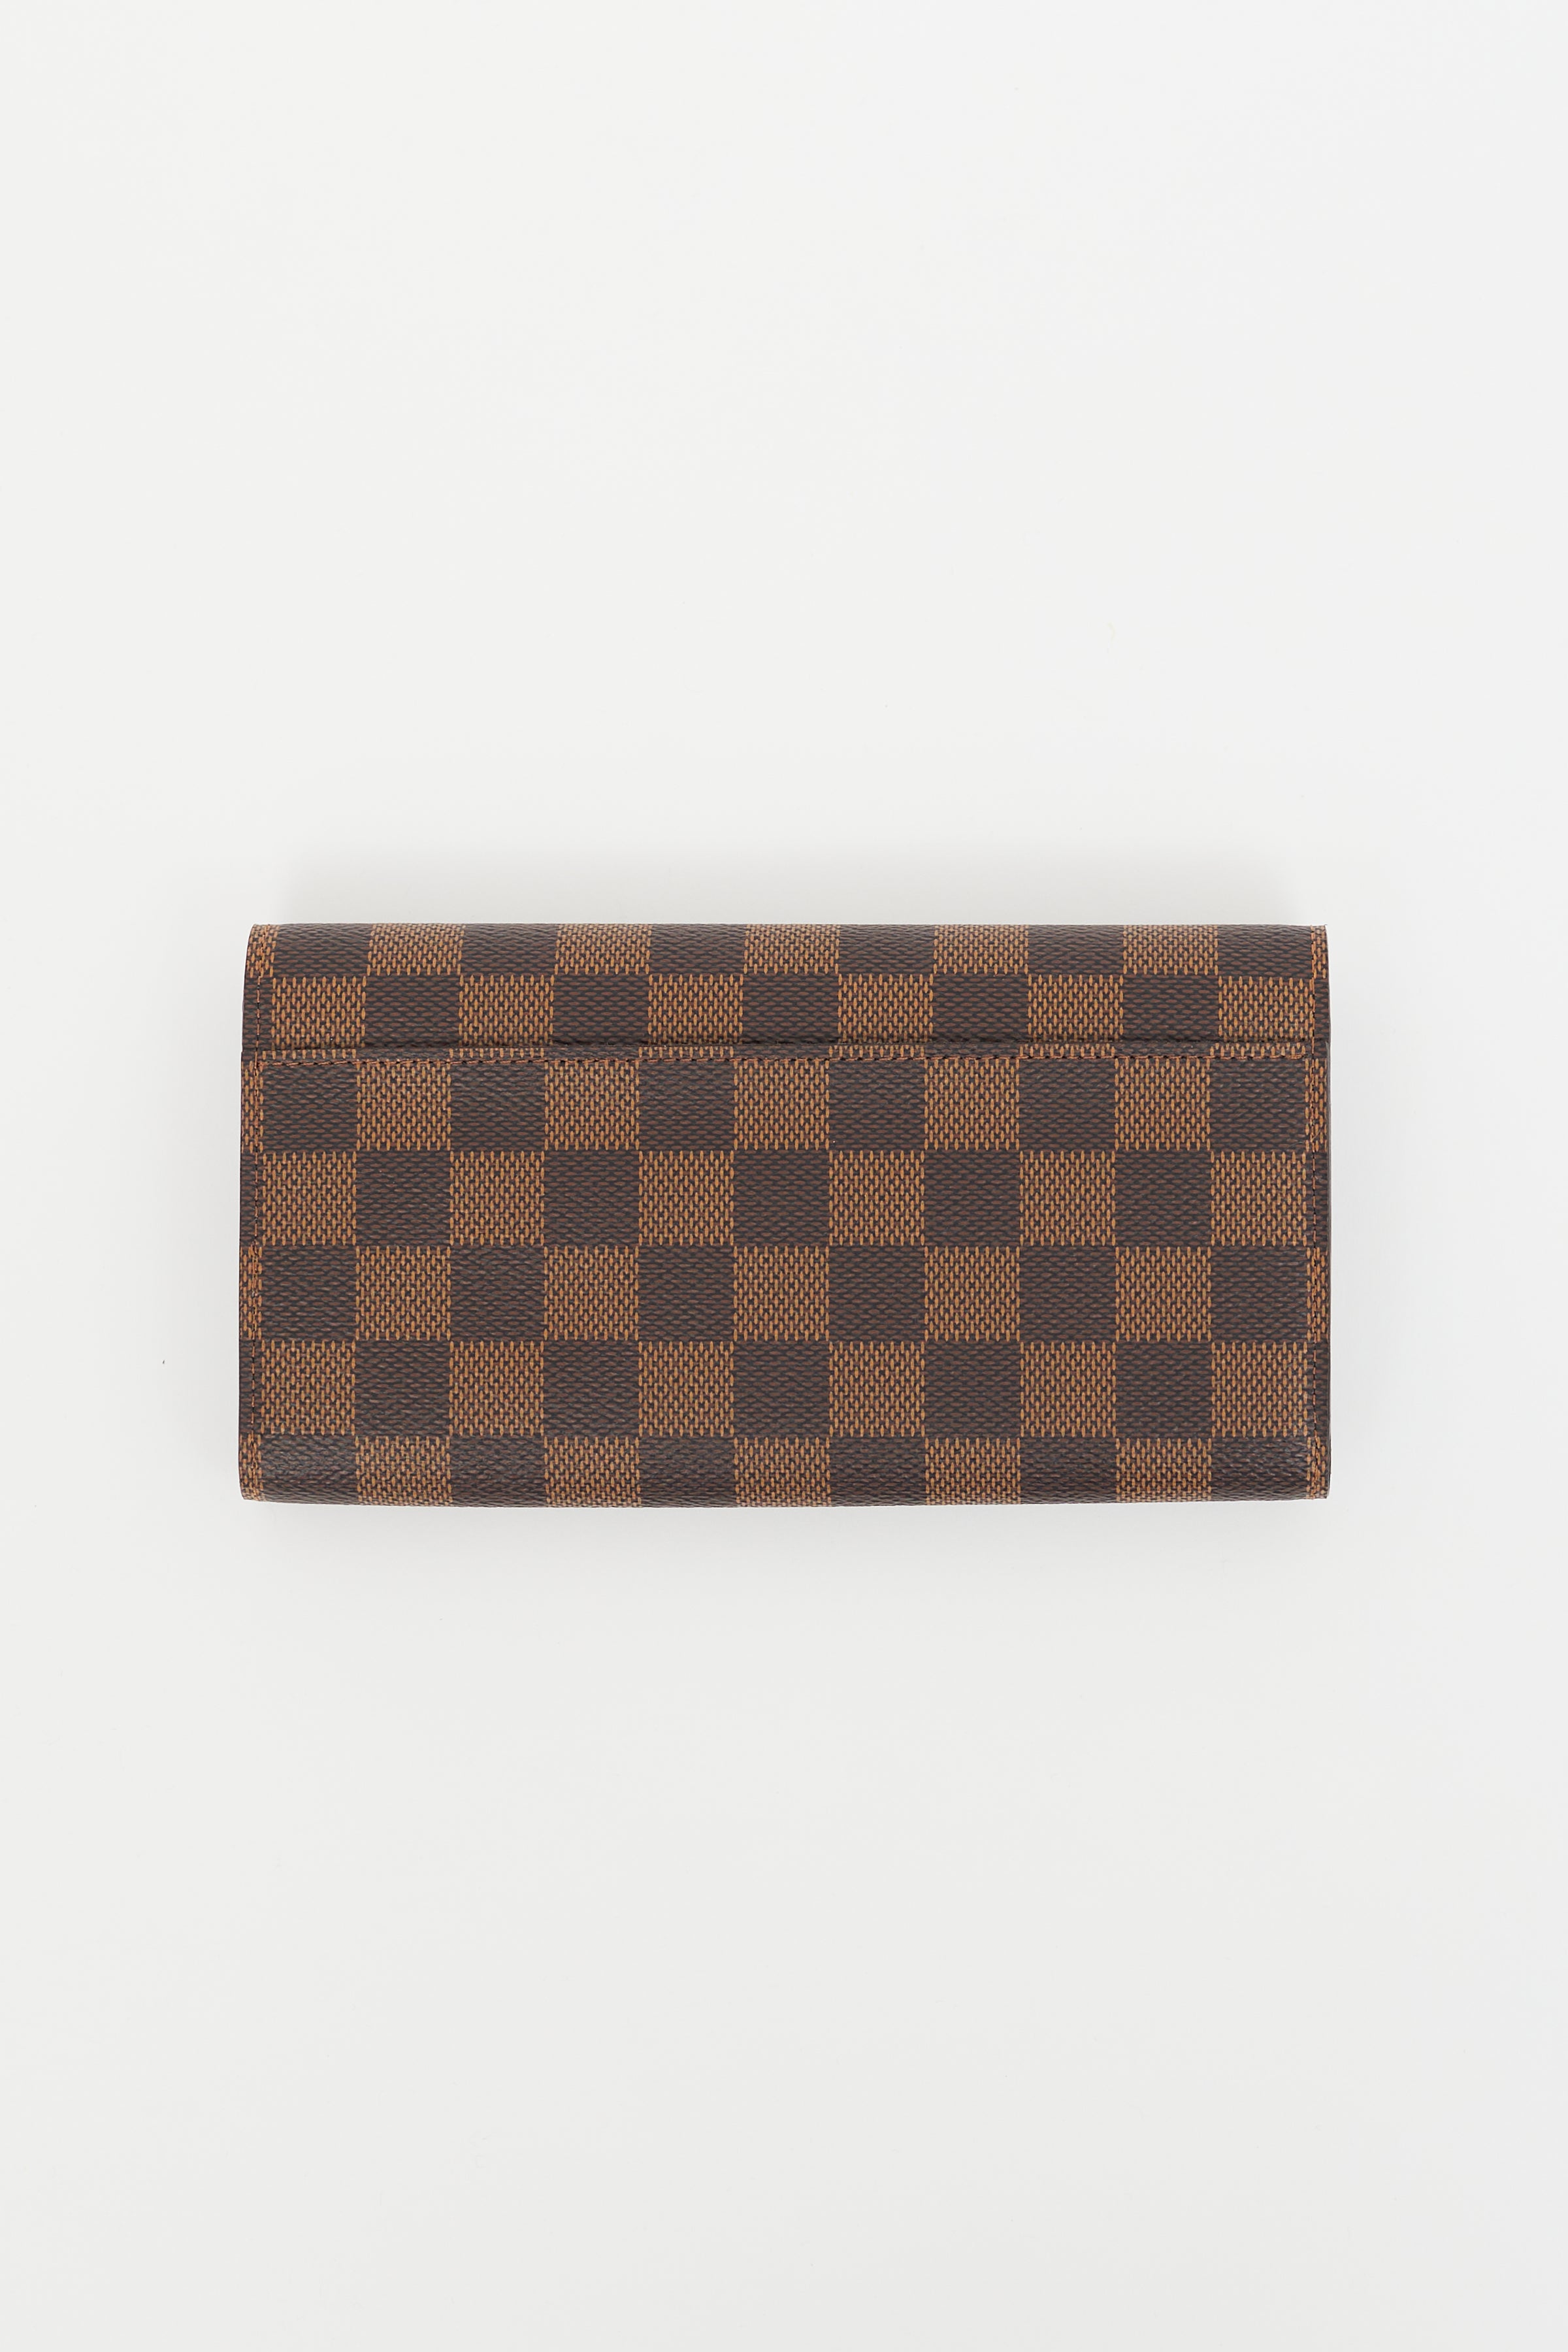 Louis Vuitton Checkbook Wallet Porte Chequier Cartes Credit European  Monogram Brown in Canvas - US